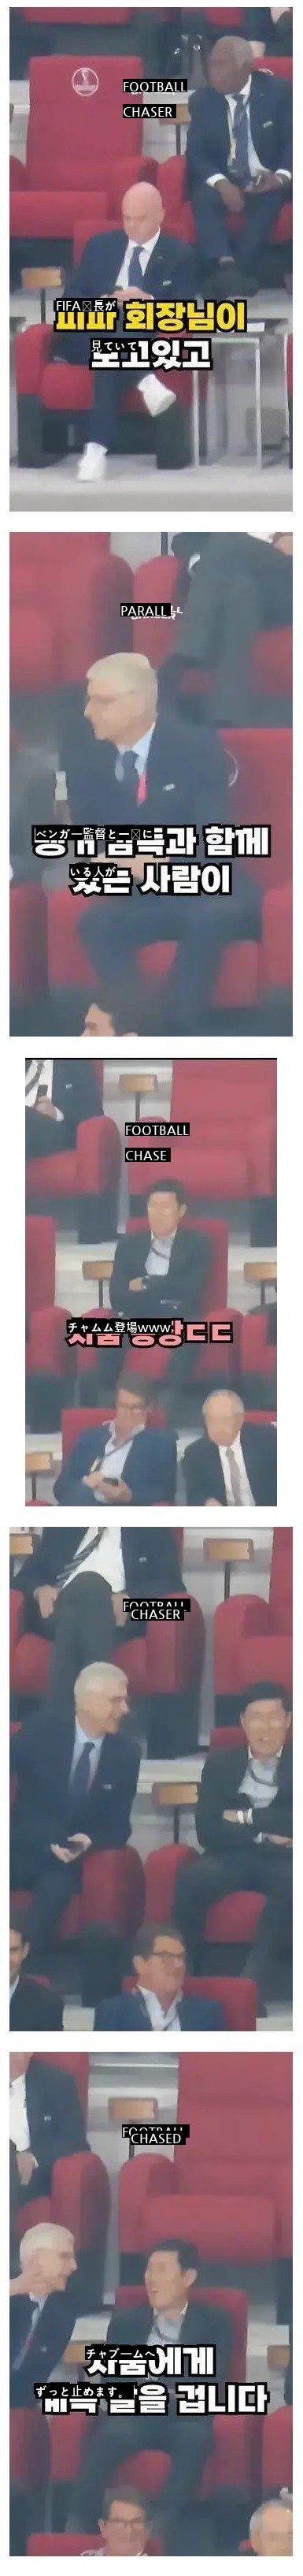 FIFA VIP席に座っている韓国人